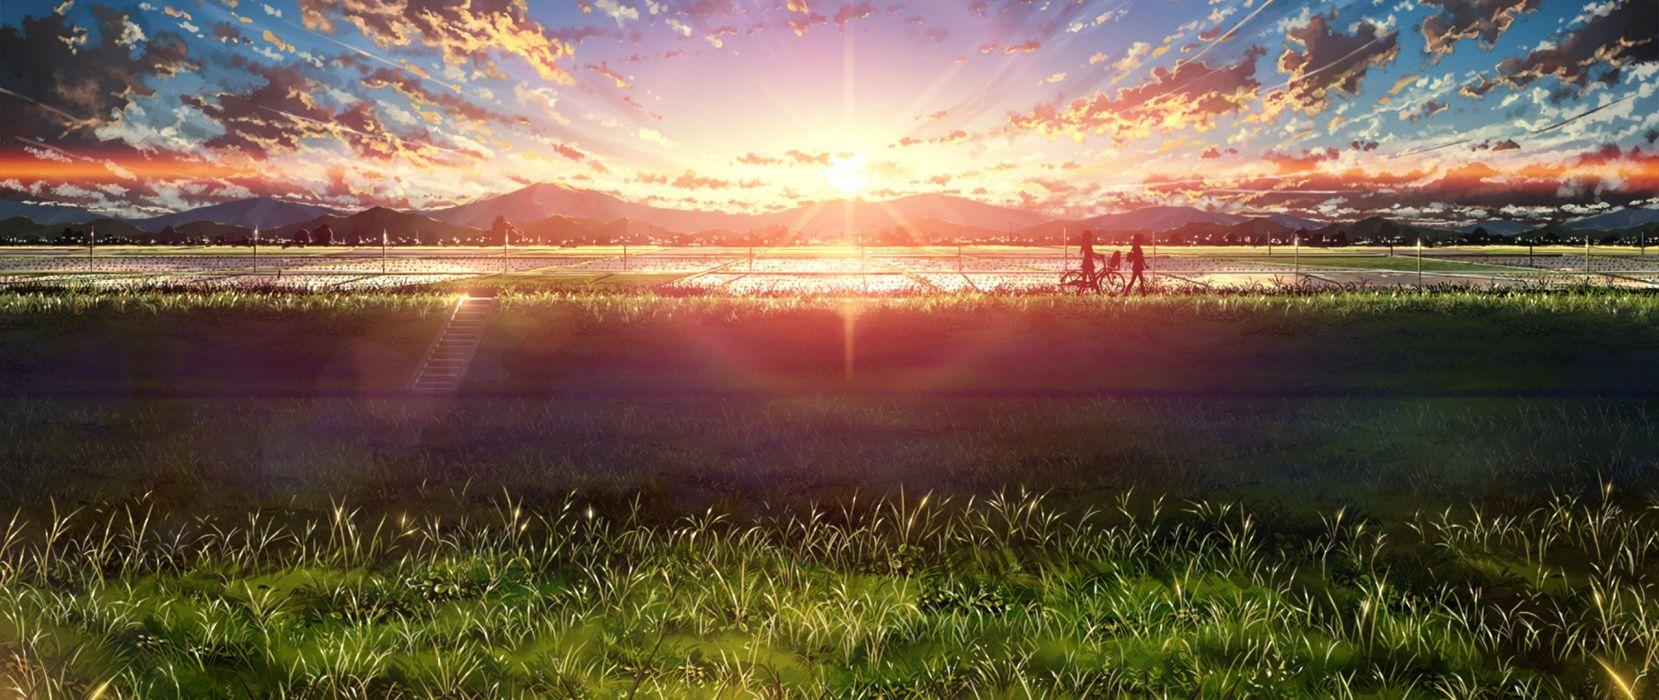 Ultra Wide Japan Anime Sky Sunlight Wallpaperx1080